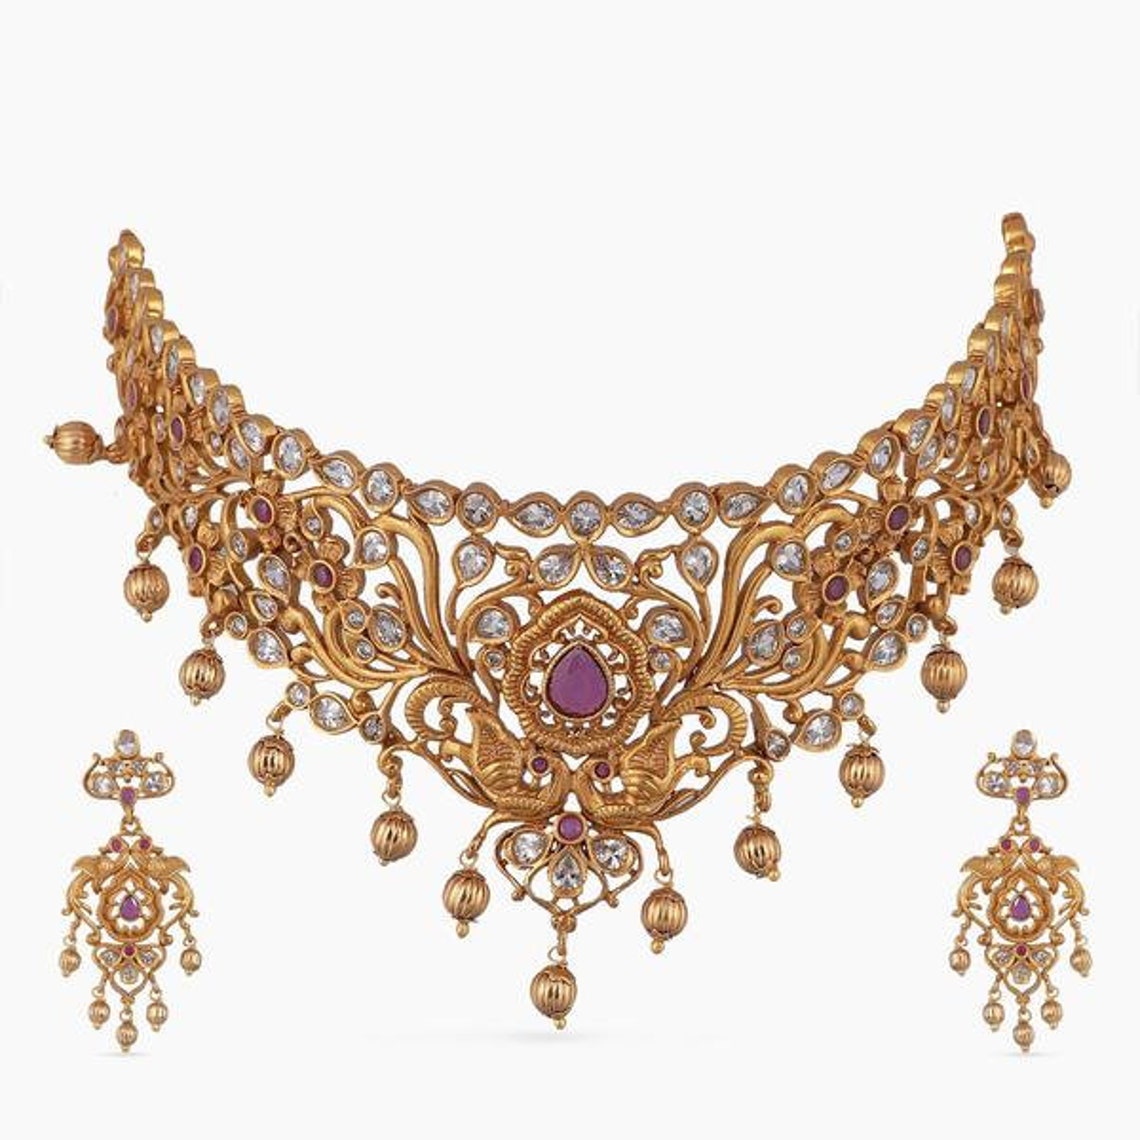 Tarinika Miah Antique Gold-Plated Indian Jewelry Choker Set | Etsy